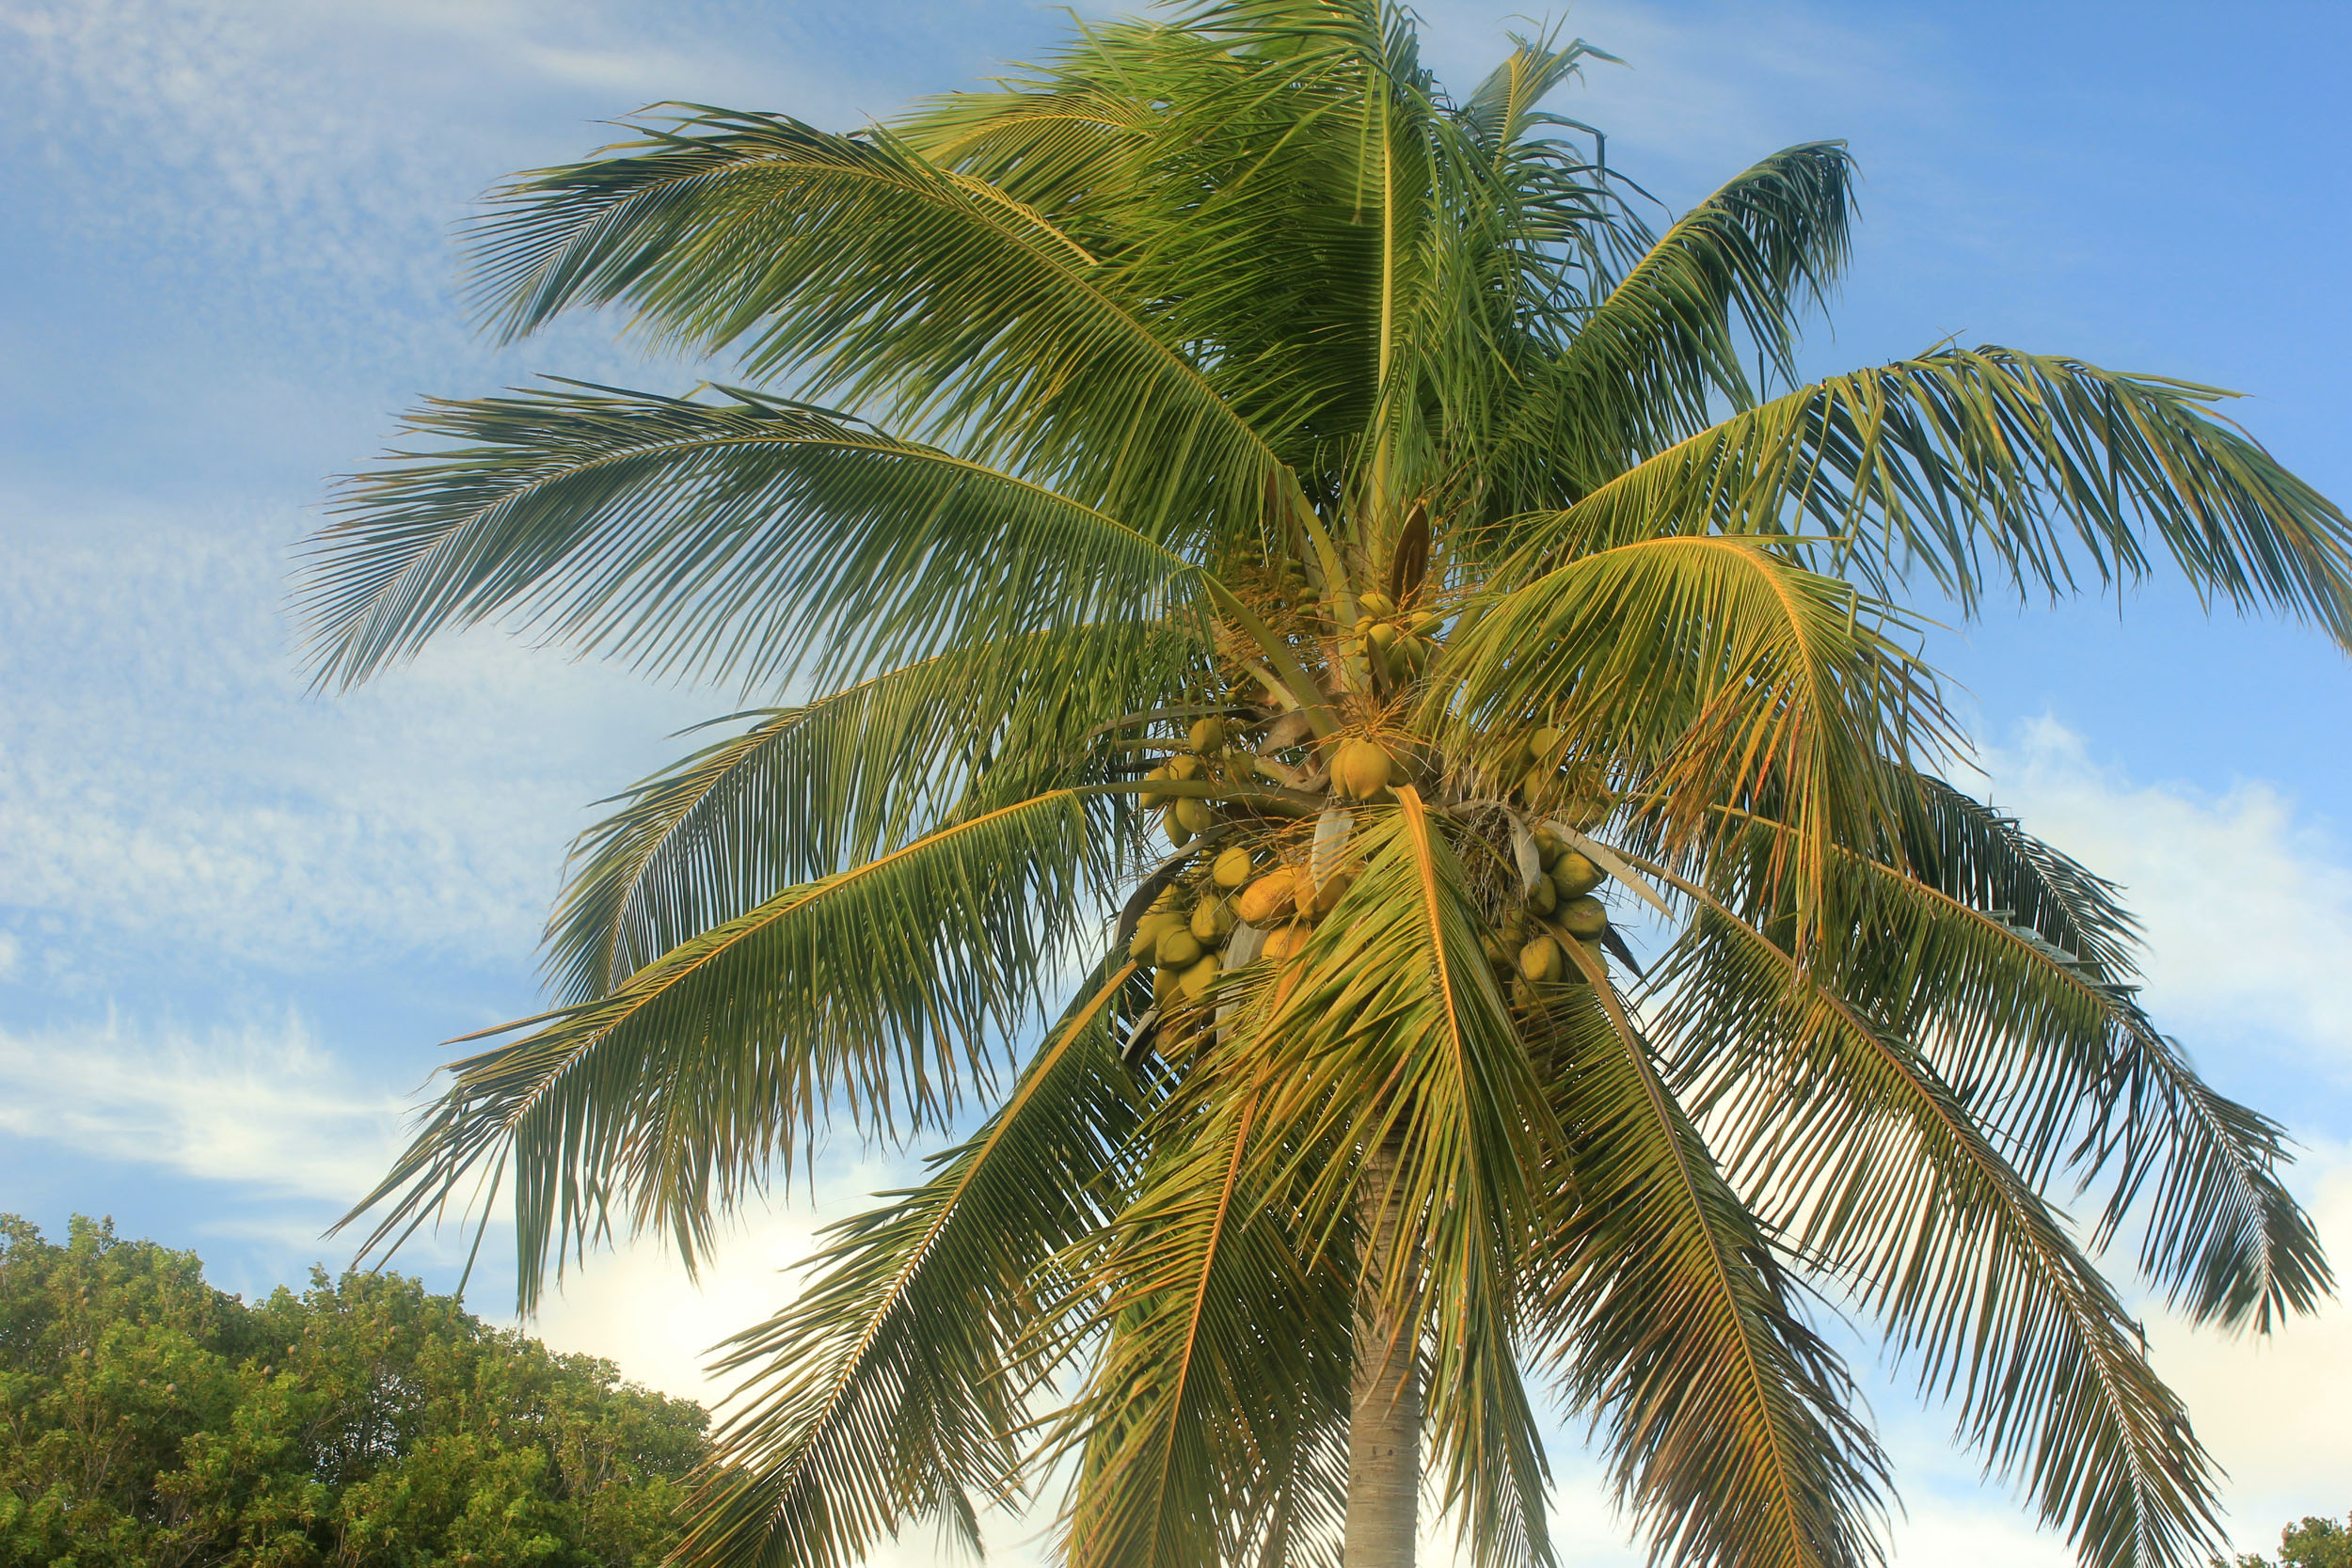 Coconut Tree image - Free stock photo - Public Domain photo - CC0 Images